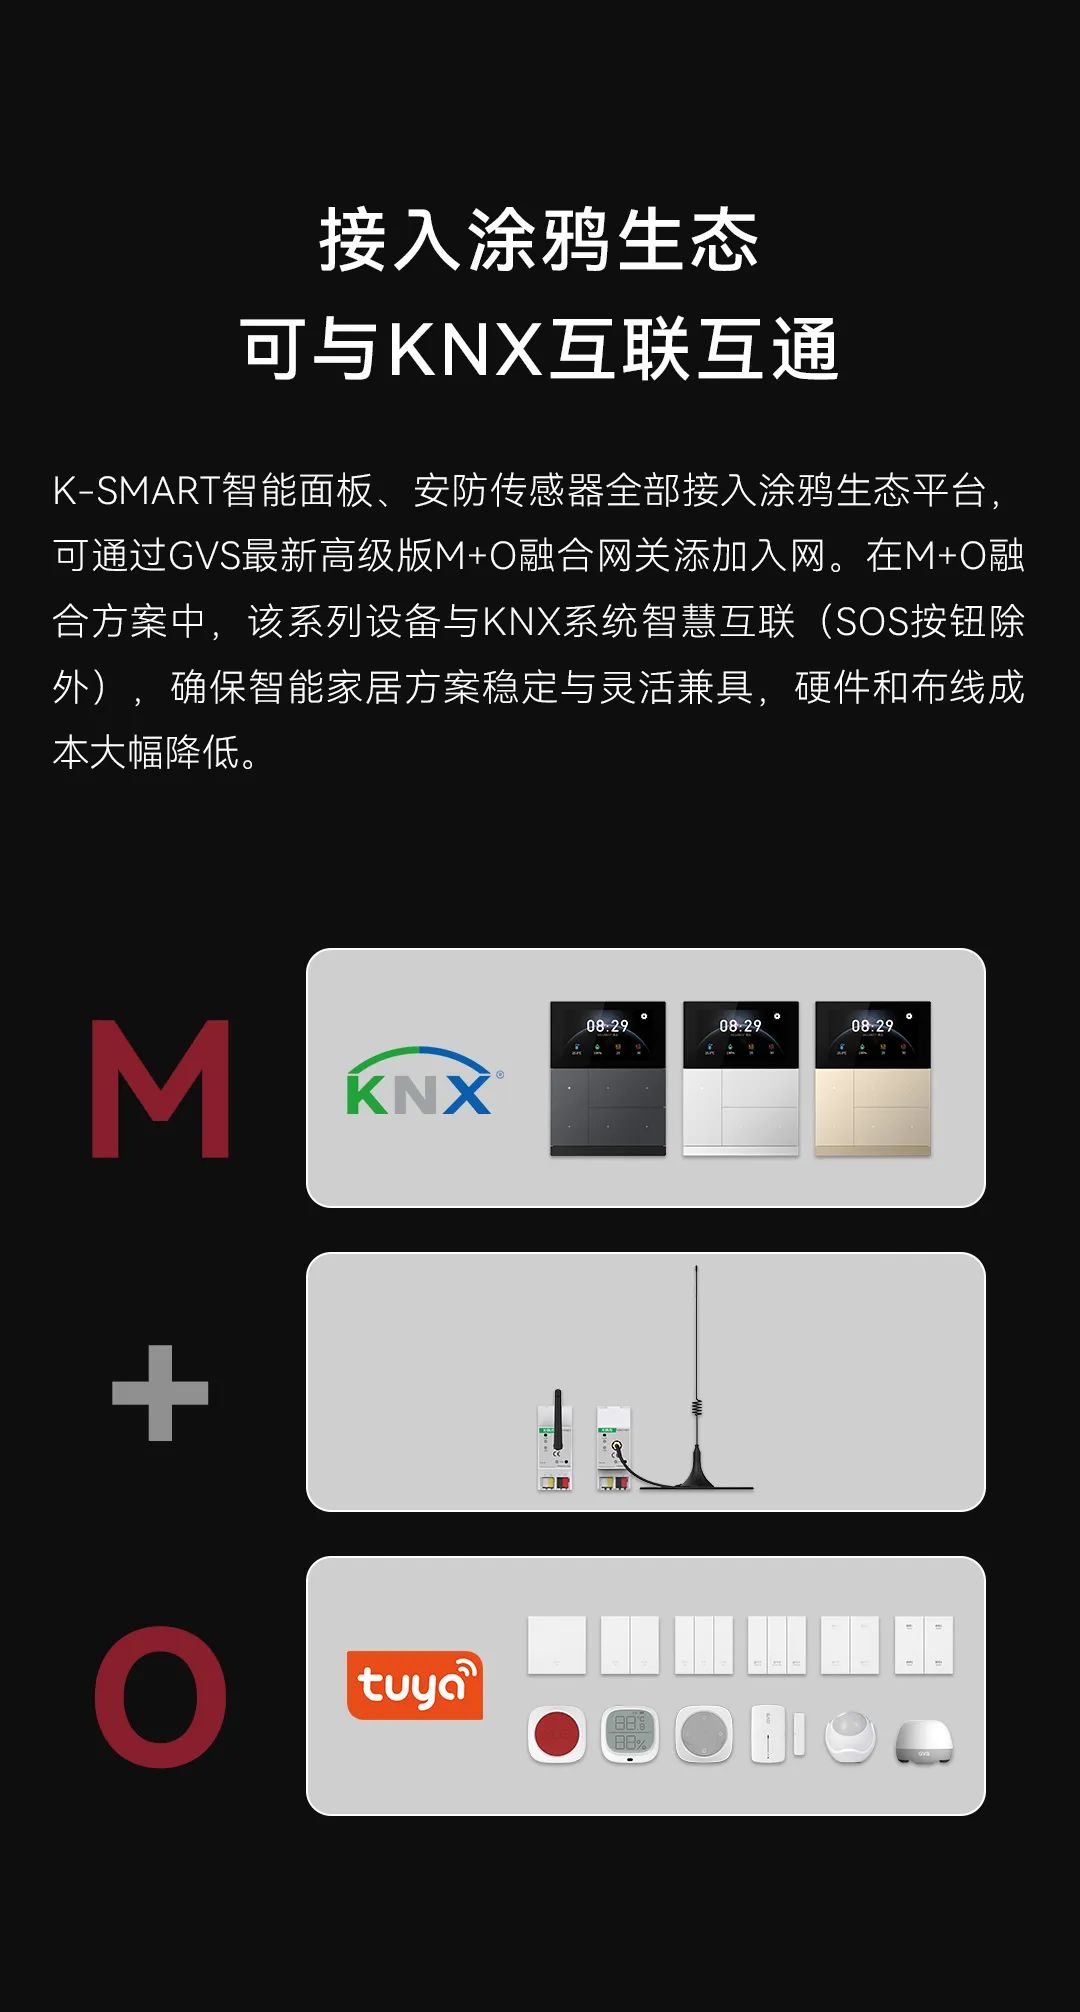 K-SMART智能面板 安防传感器可与KNX互联互通